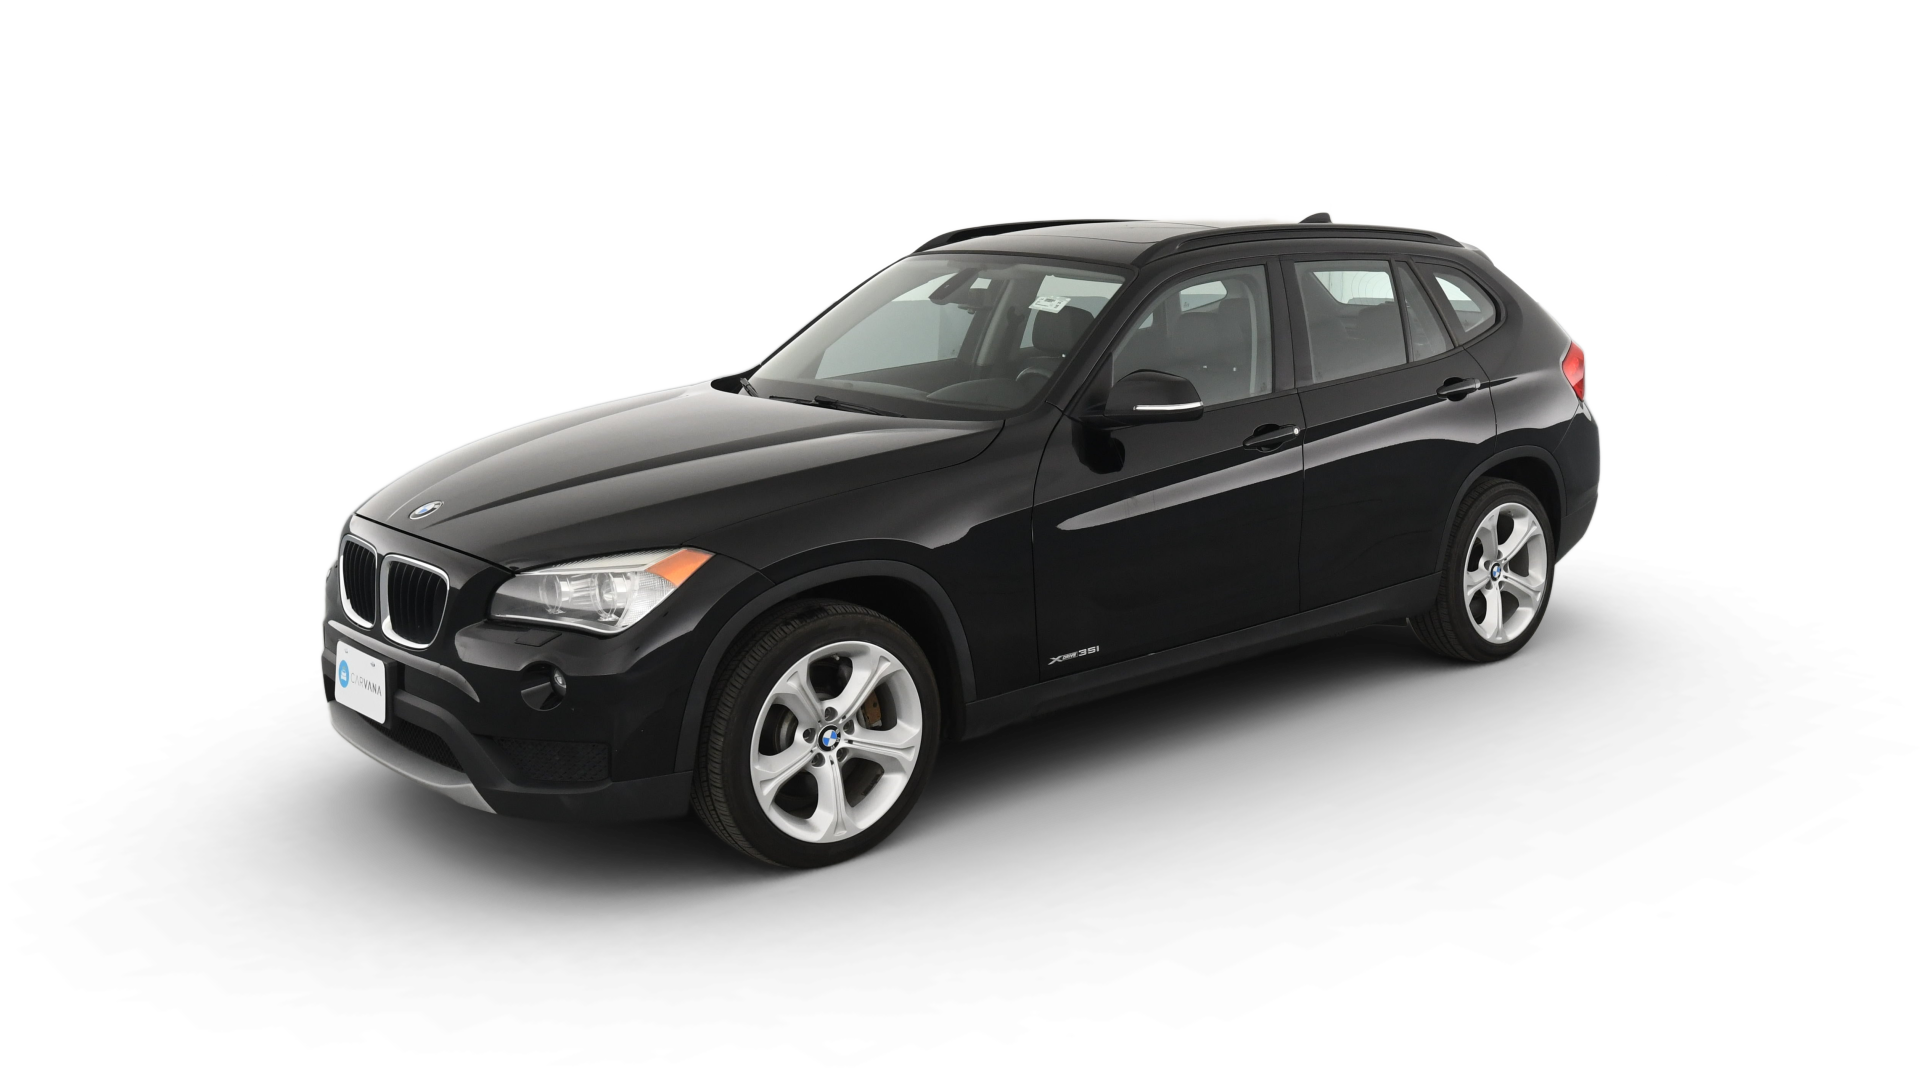 BMW X1 model image.